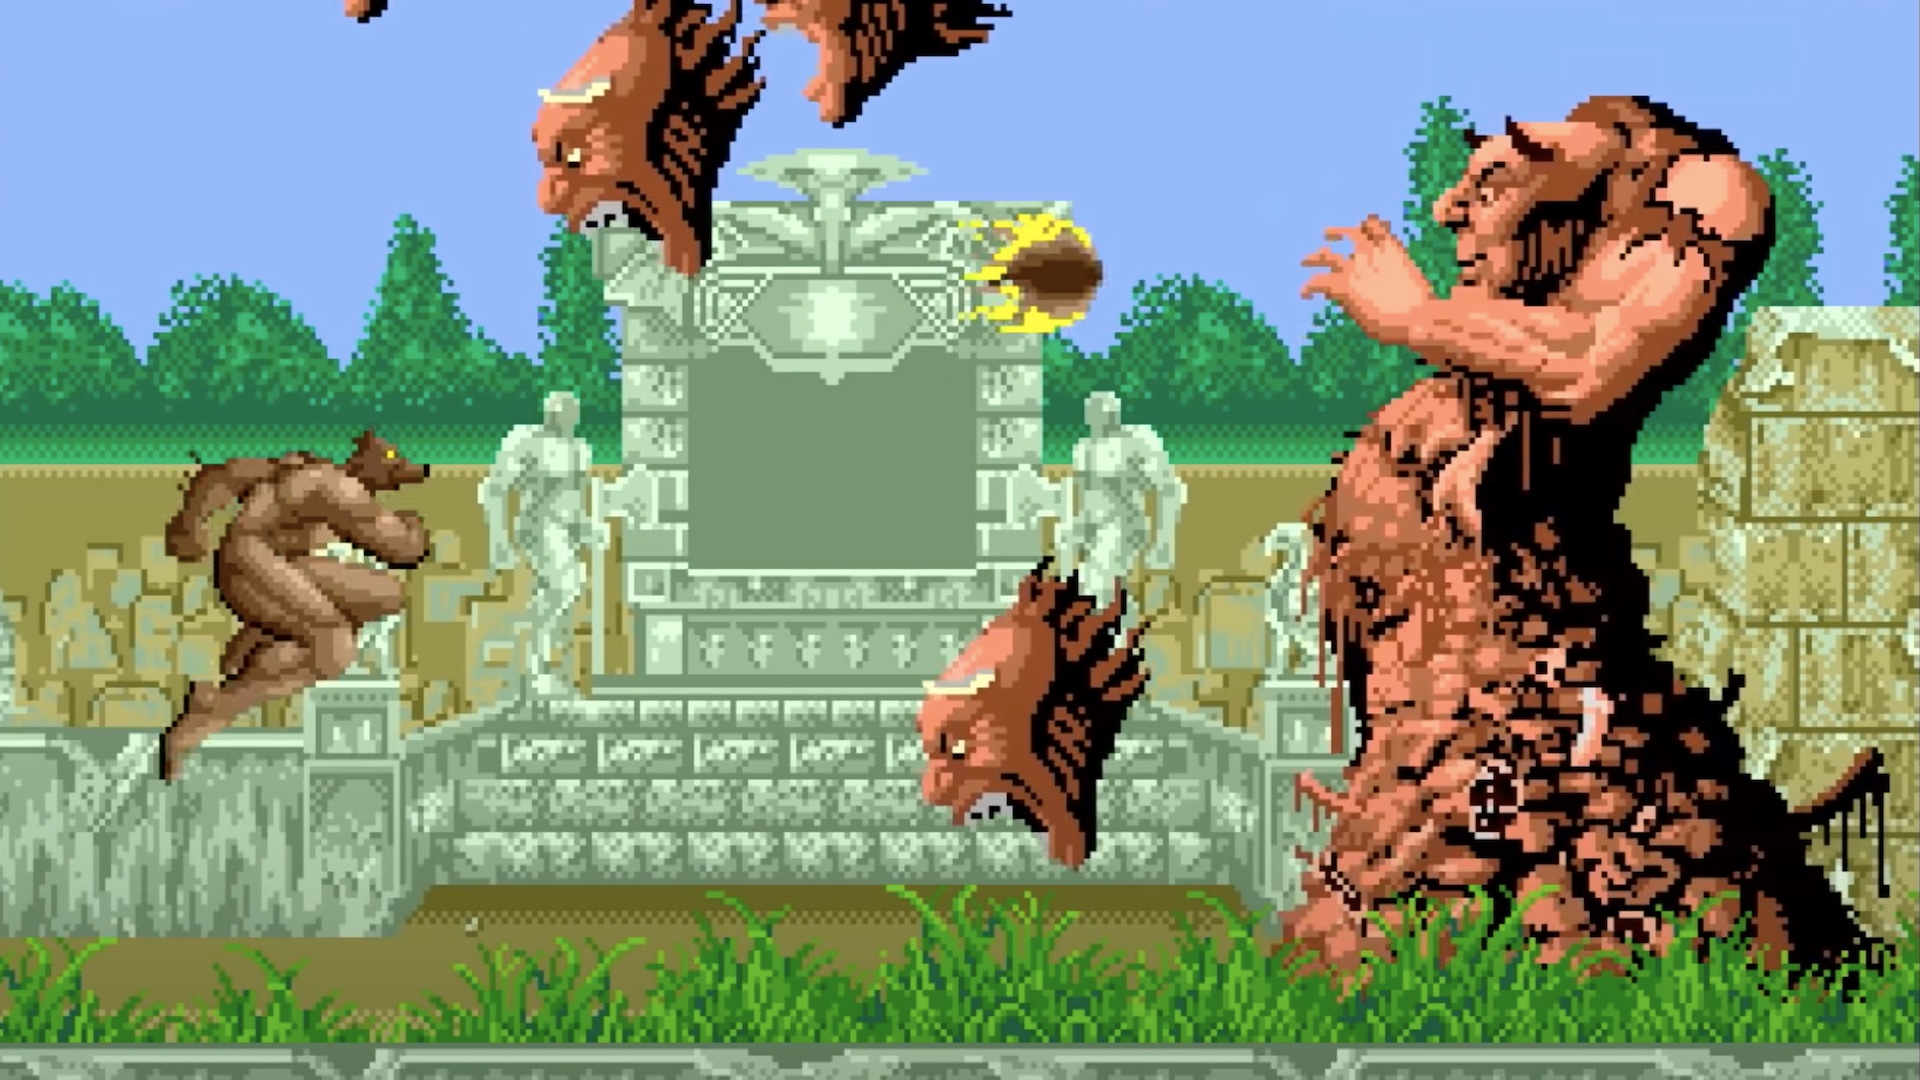 The Sega Genesis version of Altered Beast